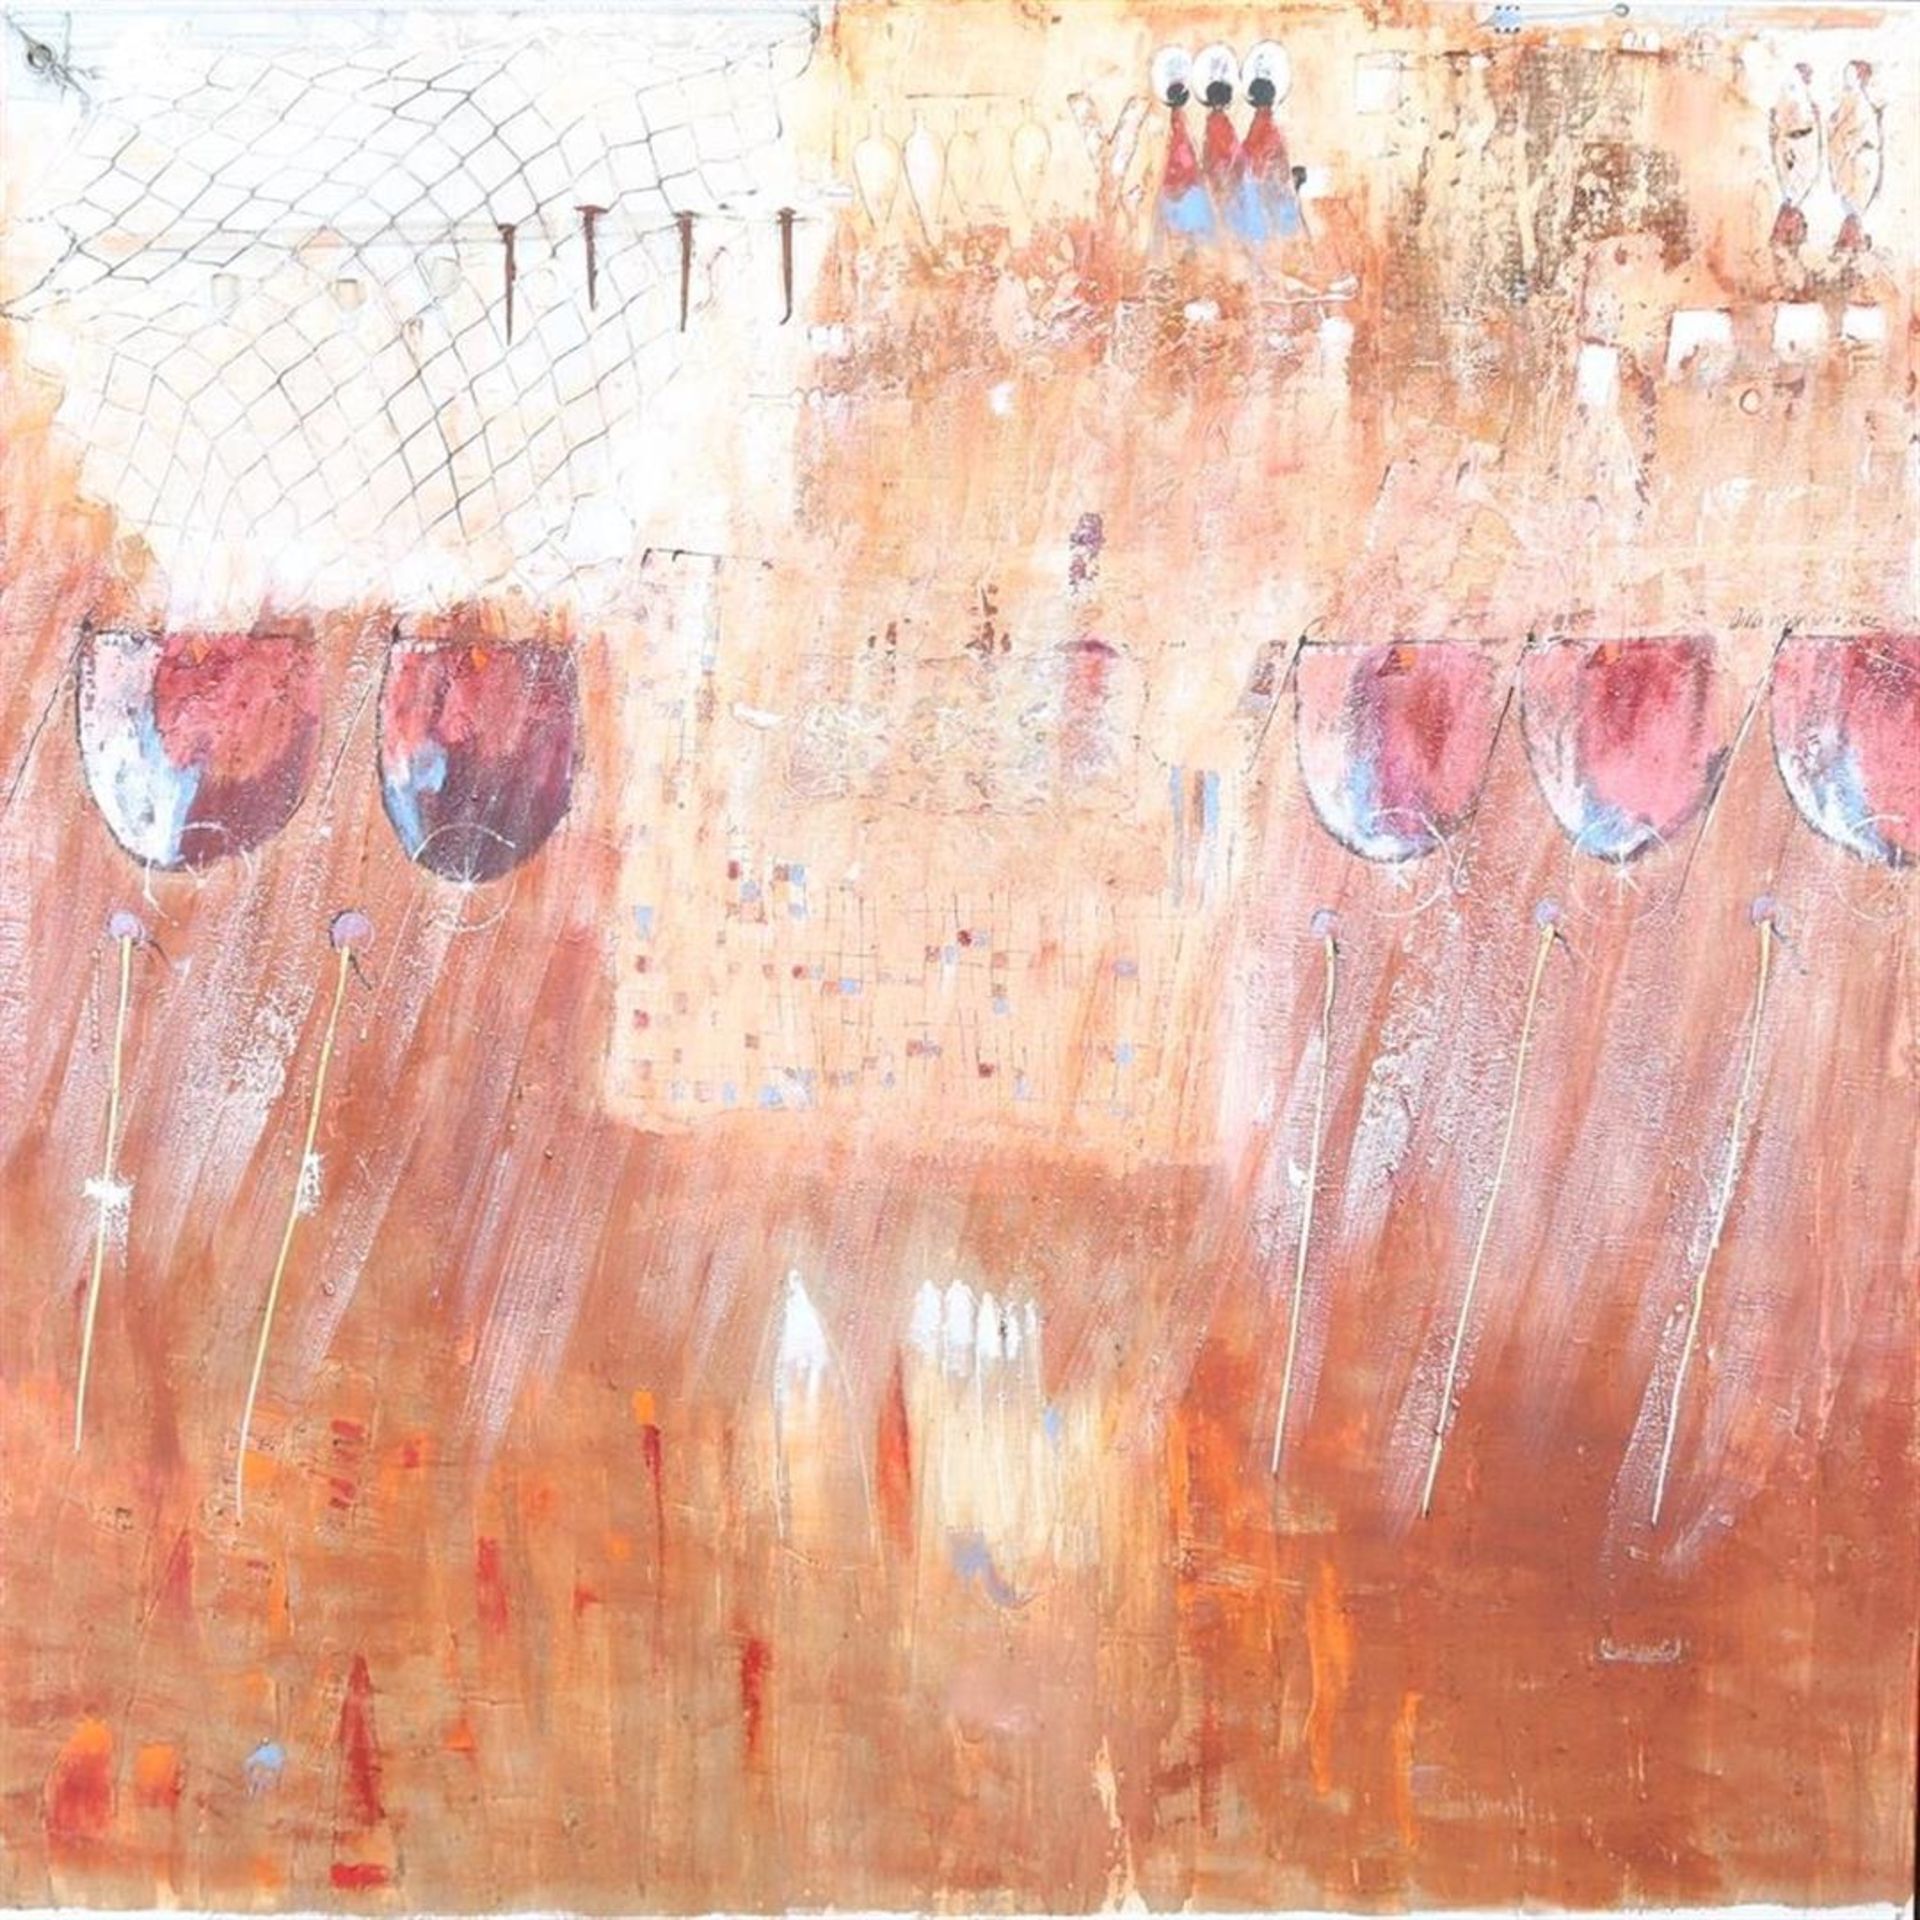 Antonio Poioumen (1946-) 'From Egypt', signed top right, mixed media on canvas 220 x 220 cm.